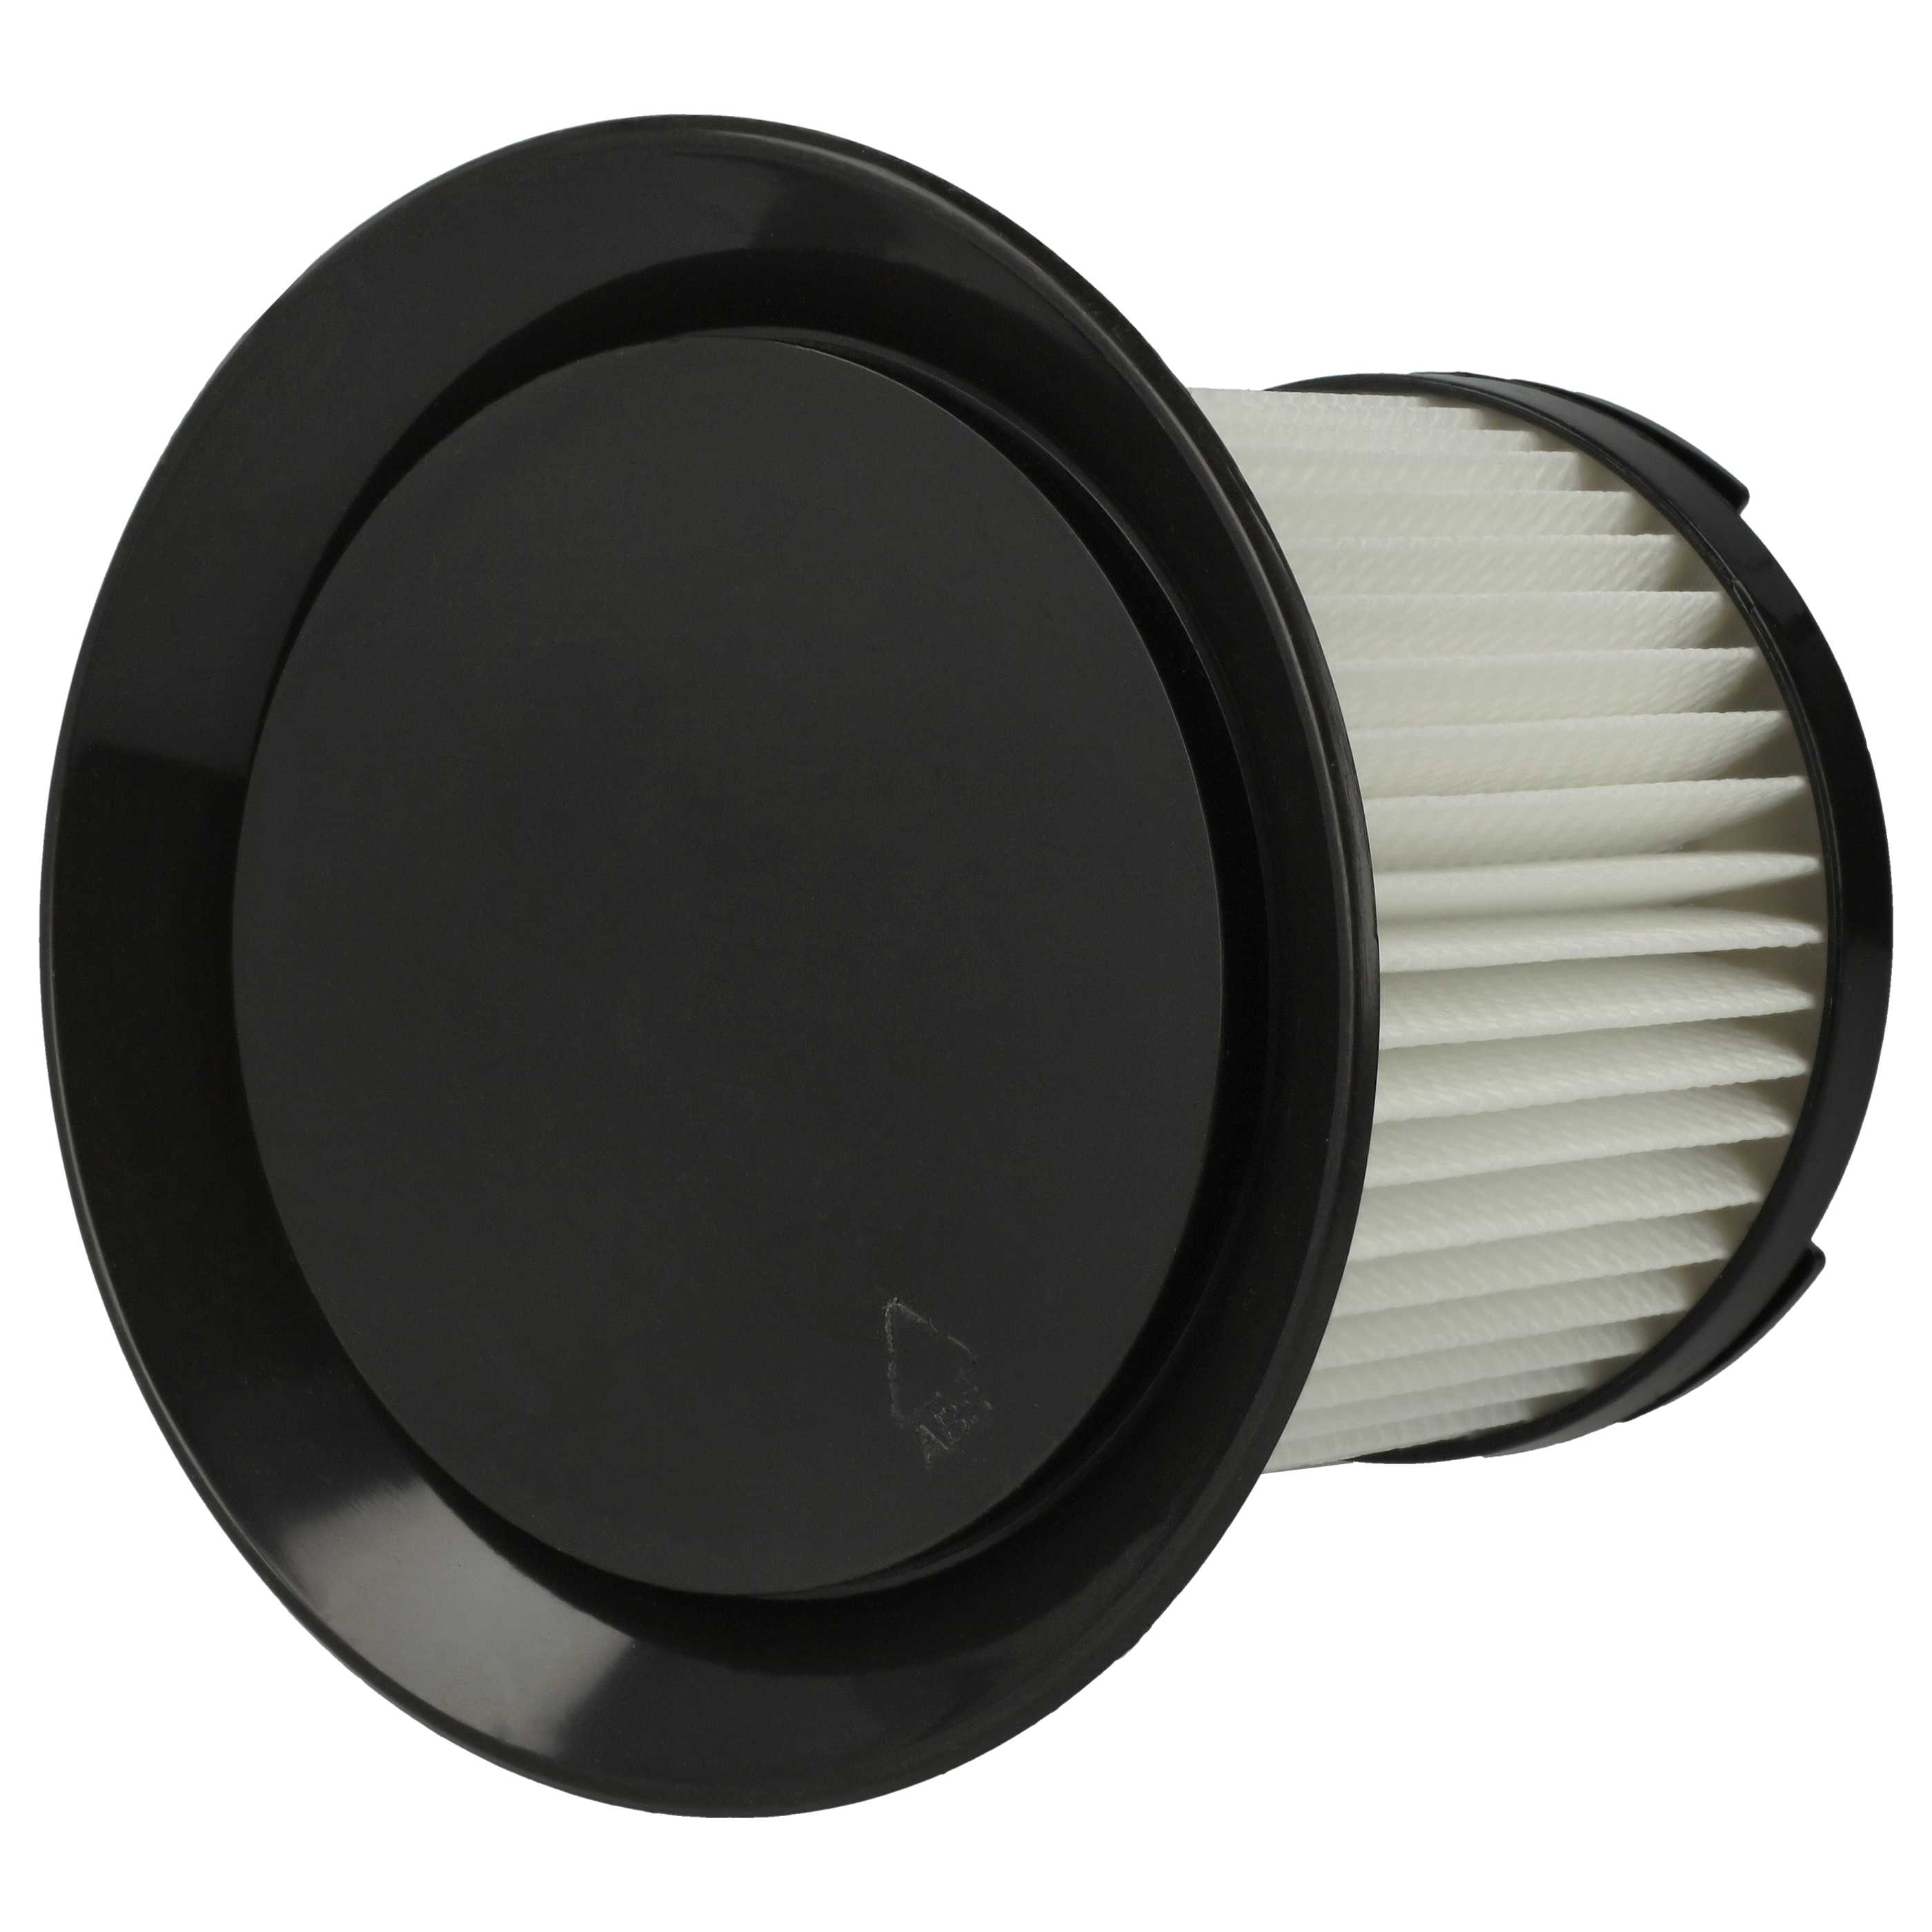 2x Filtro para aspiradora Sichler Zyklon BLS-200 - filtro Hepa negro / blanco